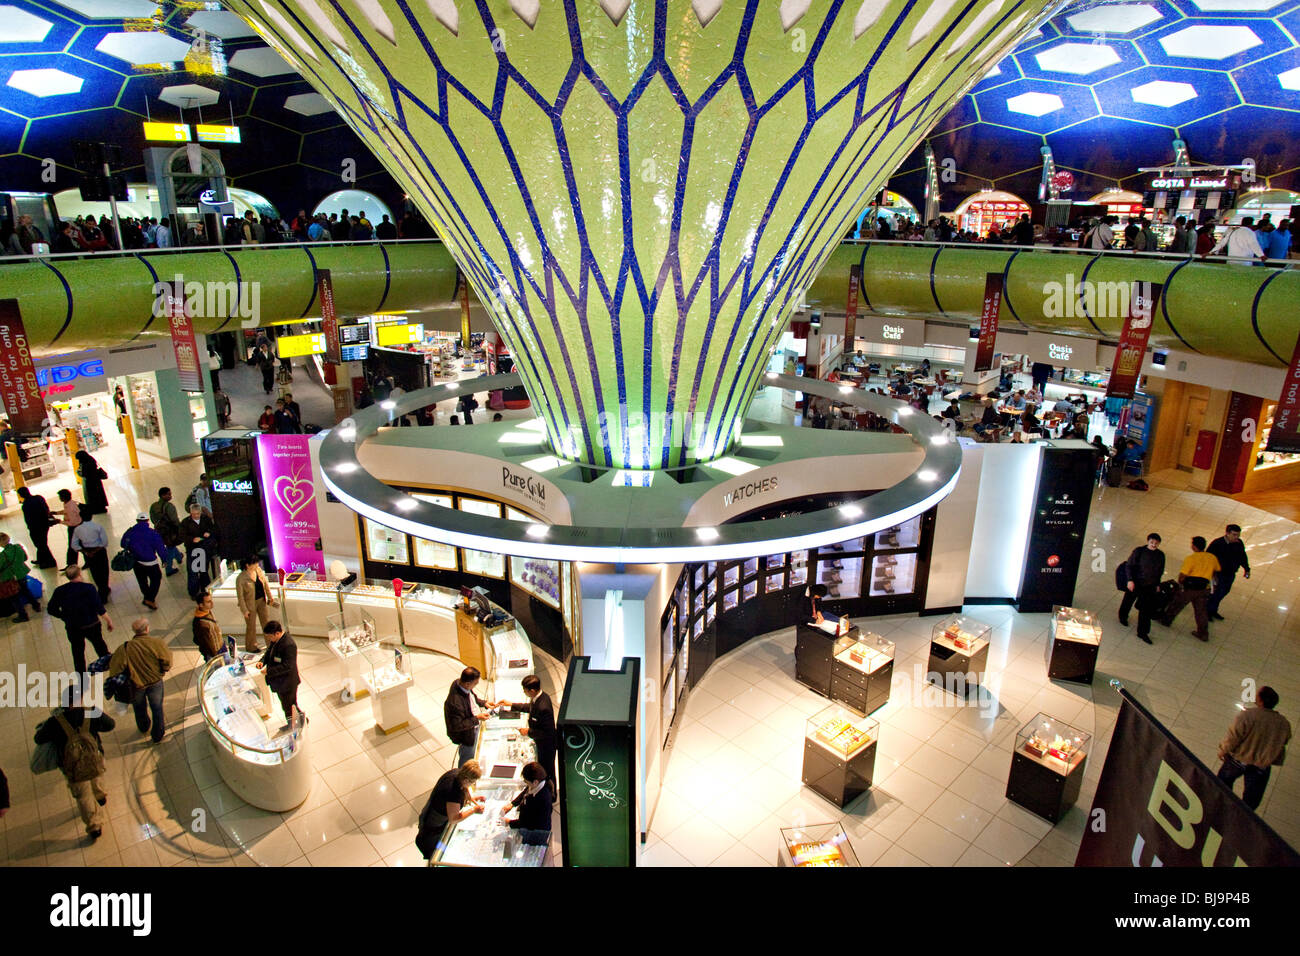 Abu Dhabi airport, United Arab Emirates Stock Photo